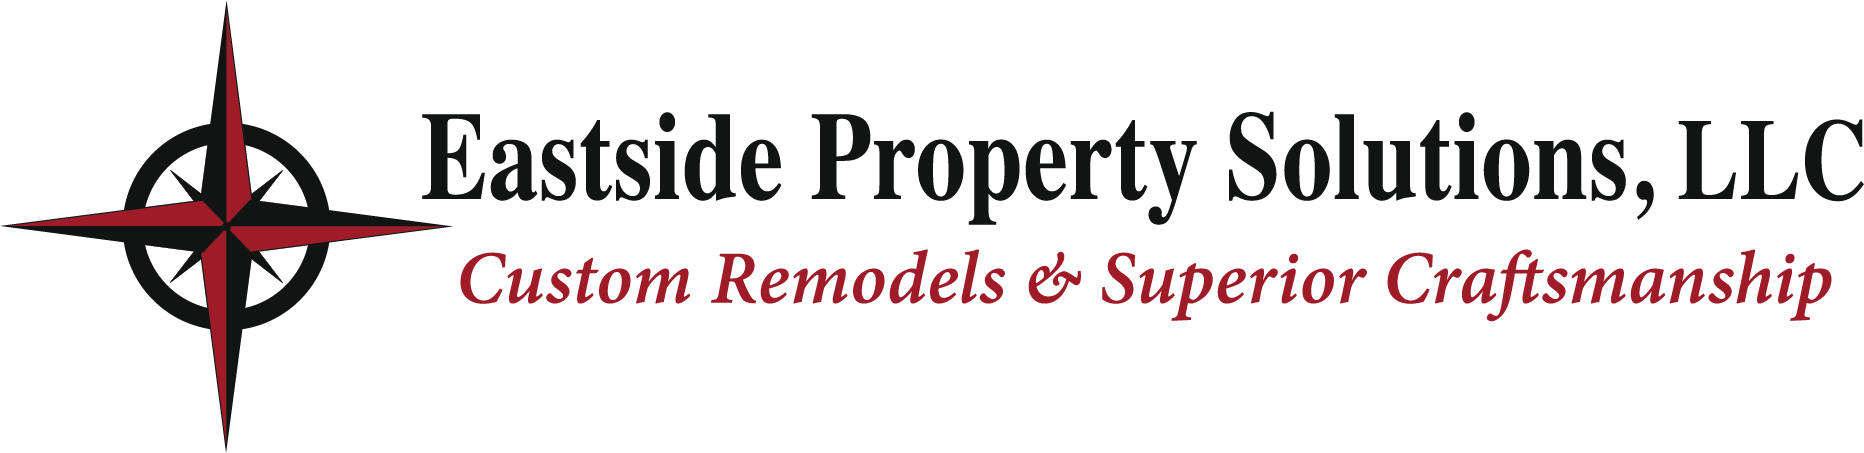 Eastside Property Solutions